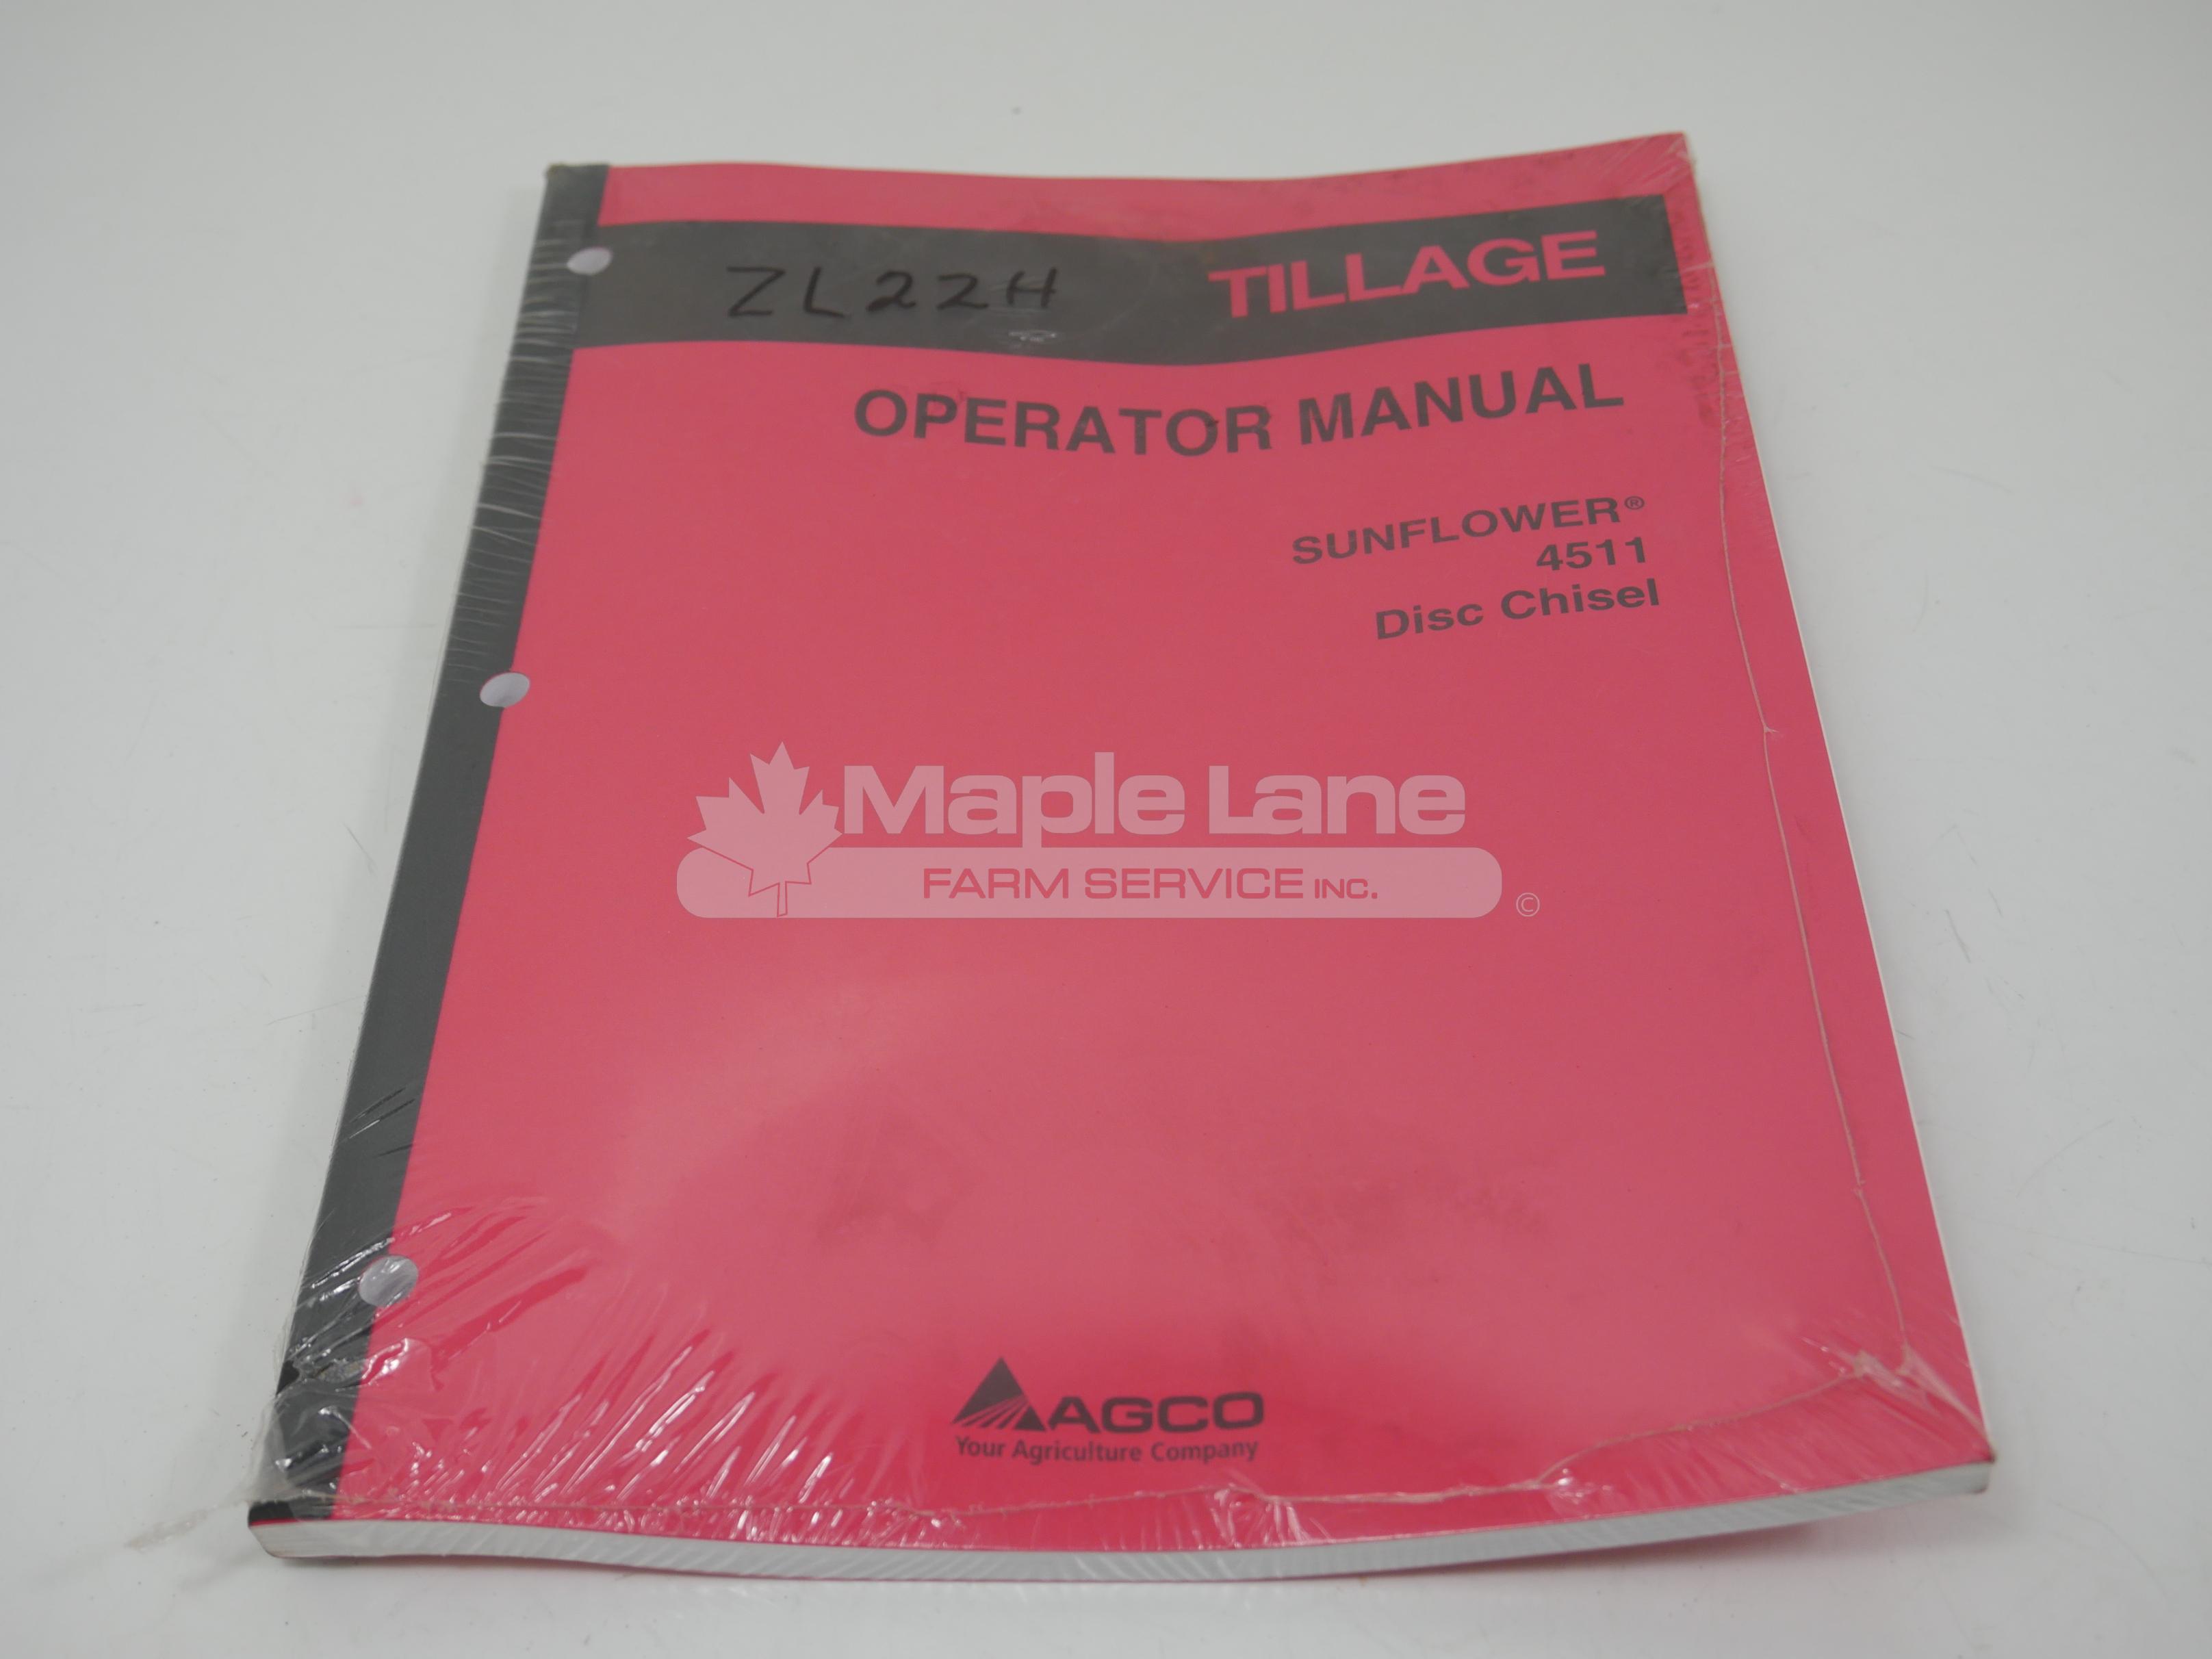 997806SNG 4511 Operator Manual